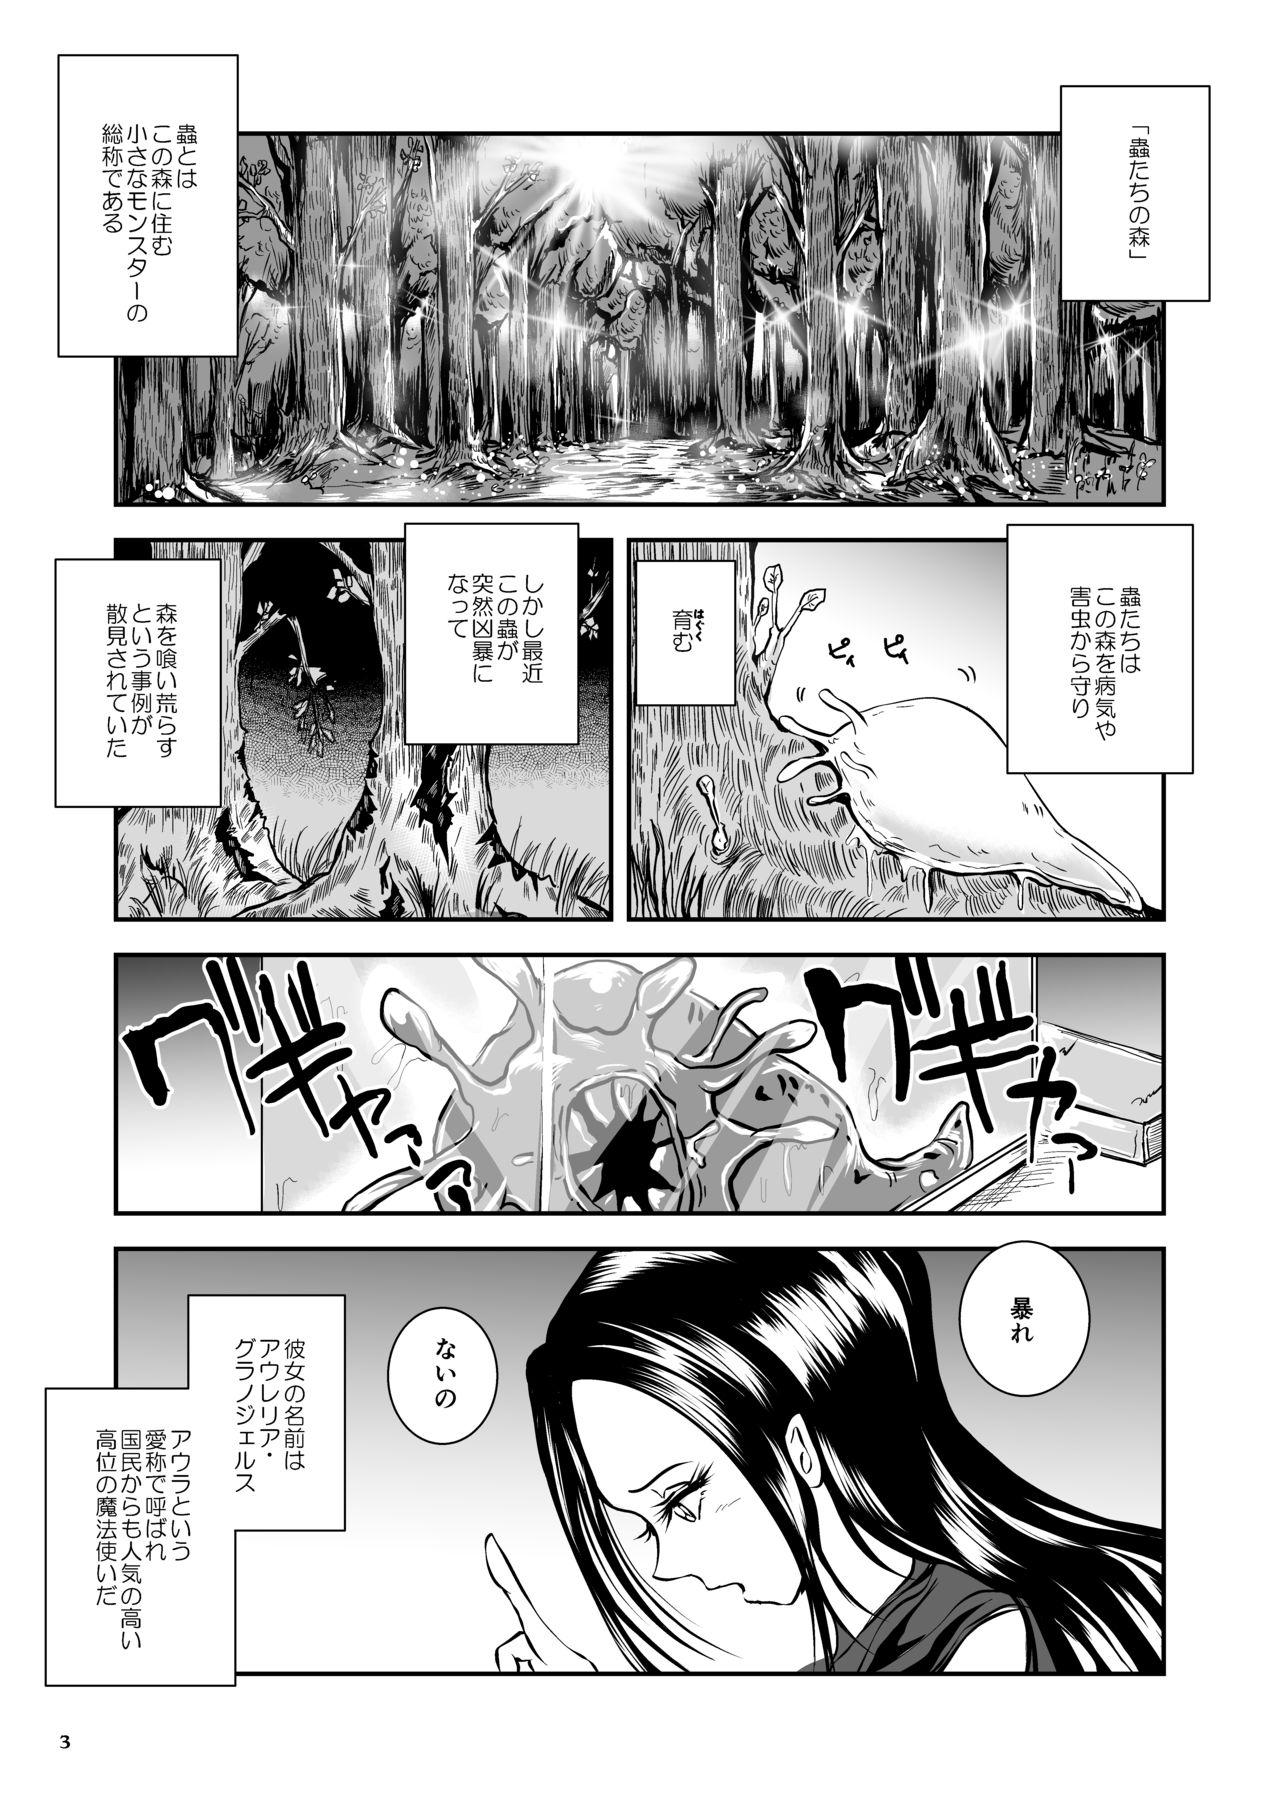 Pussyfucking Oonamekuji to Kurokami no Mahoutsukai - Parasitized Giant Slugs V.S. Sorceress of the Black Hair as Aura Swing - Page 3